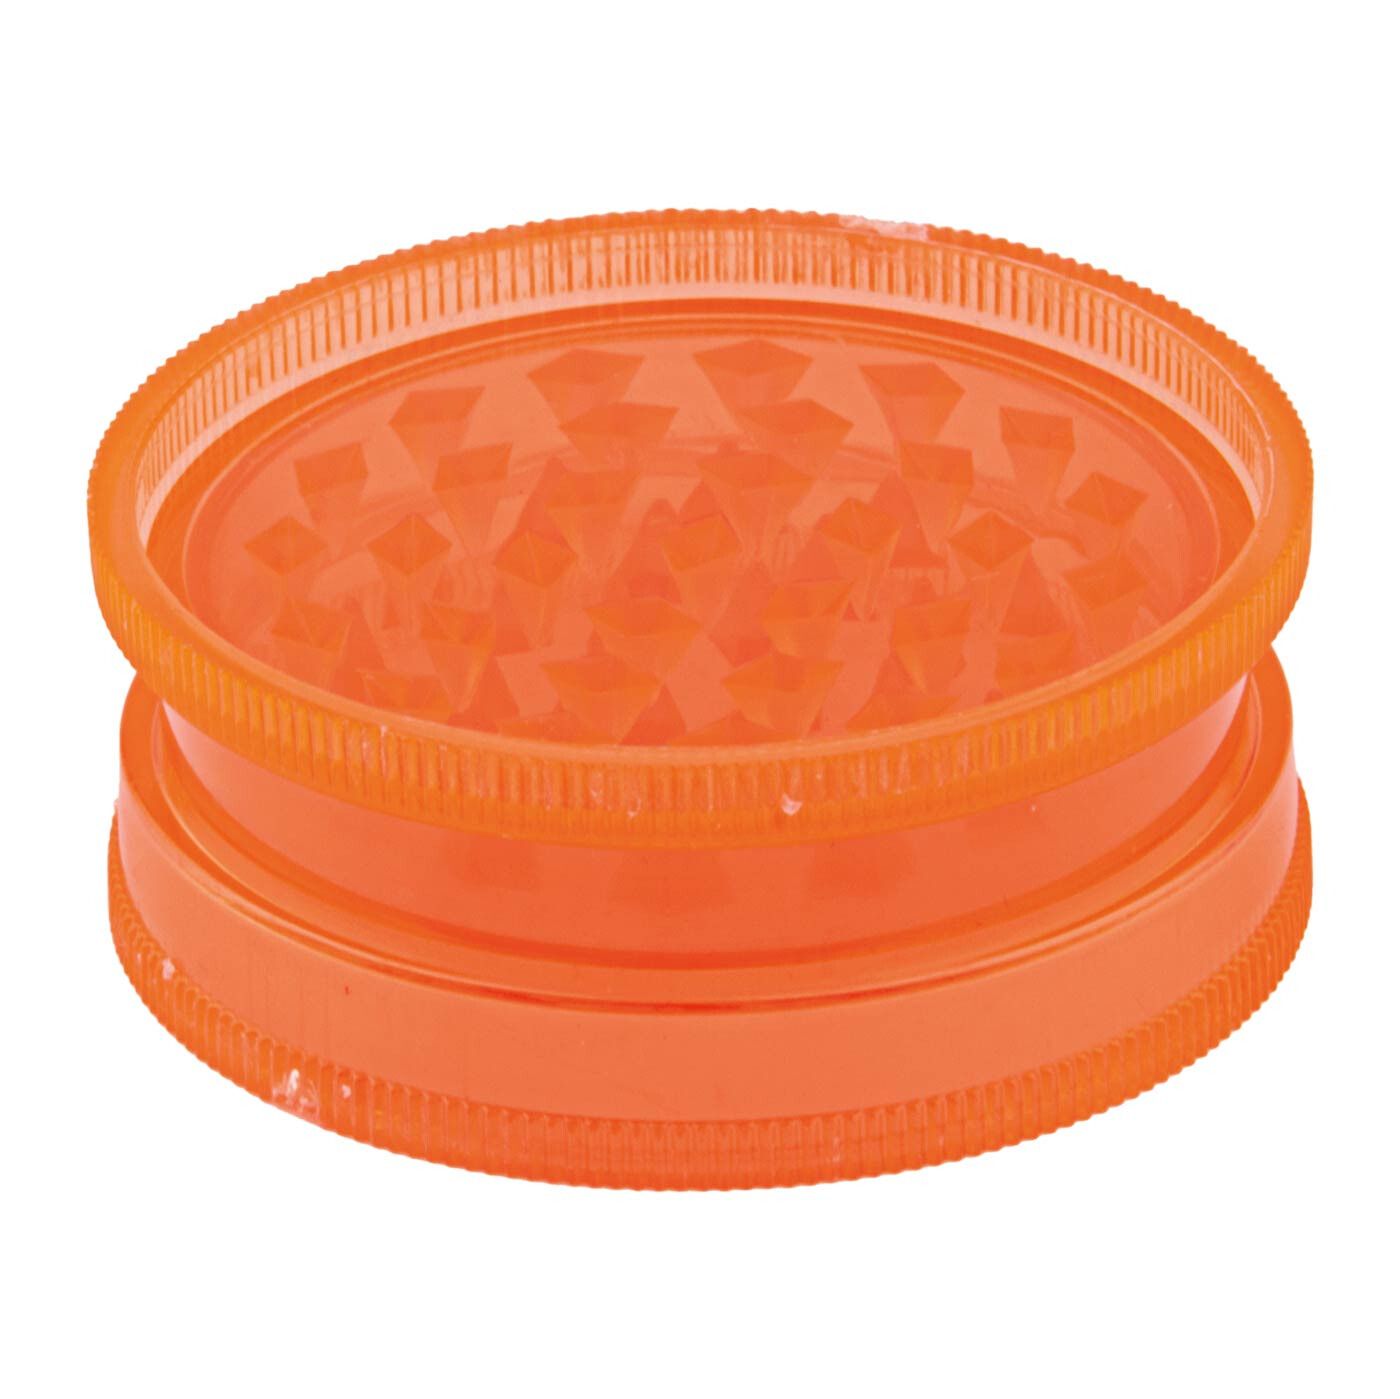 Acrylic Grinder With Stash Compartment Orange